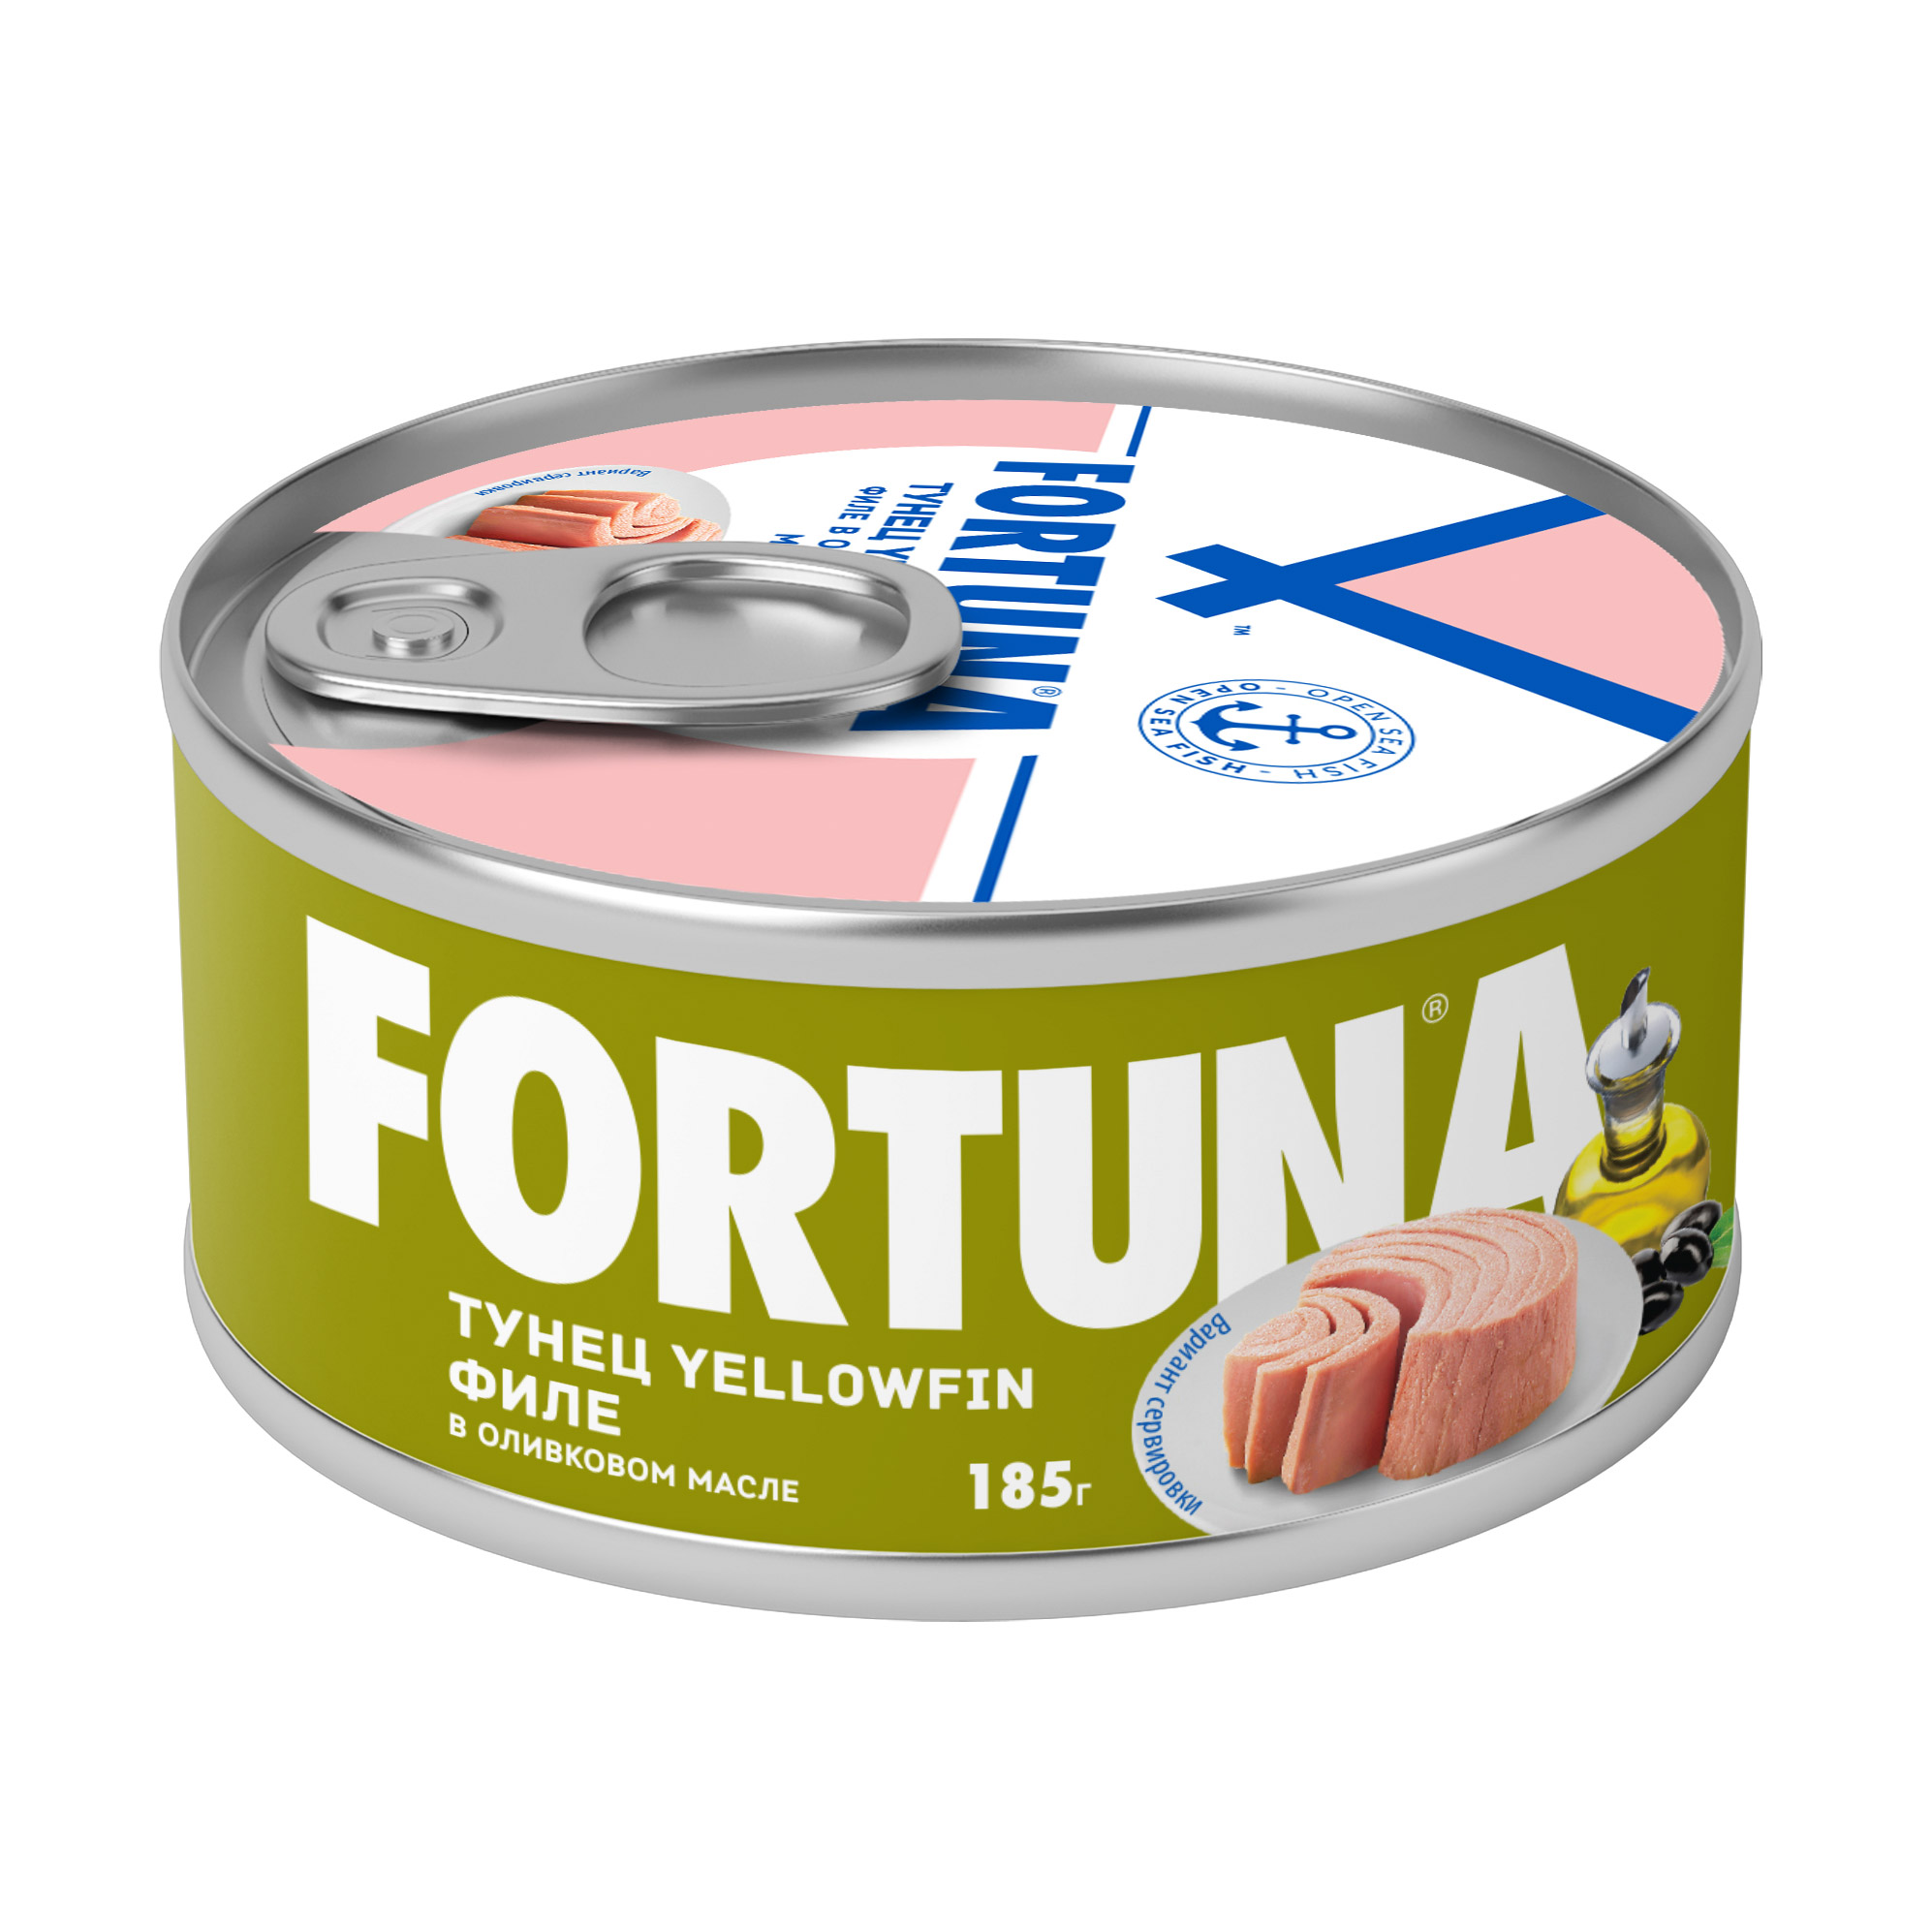 Тунец FORTUNA Yellowfin филе в оливковом масле 185 г тунец фортуна 185 г кусочками в масле ж б